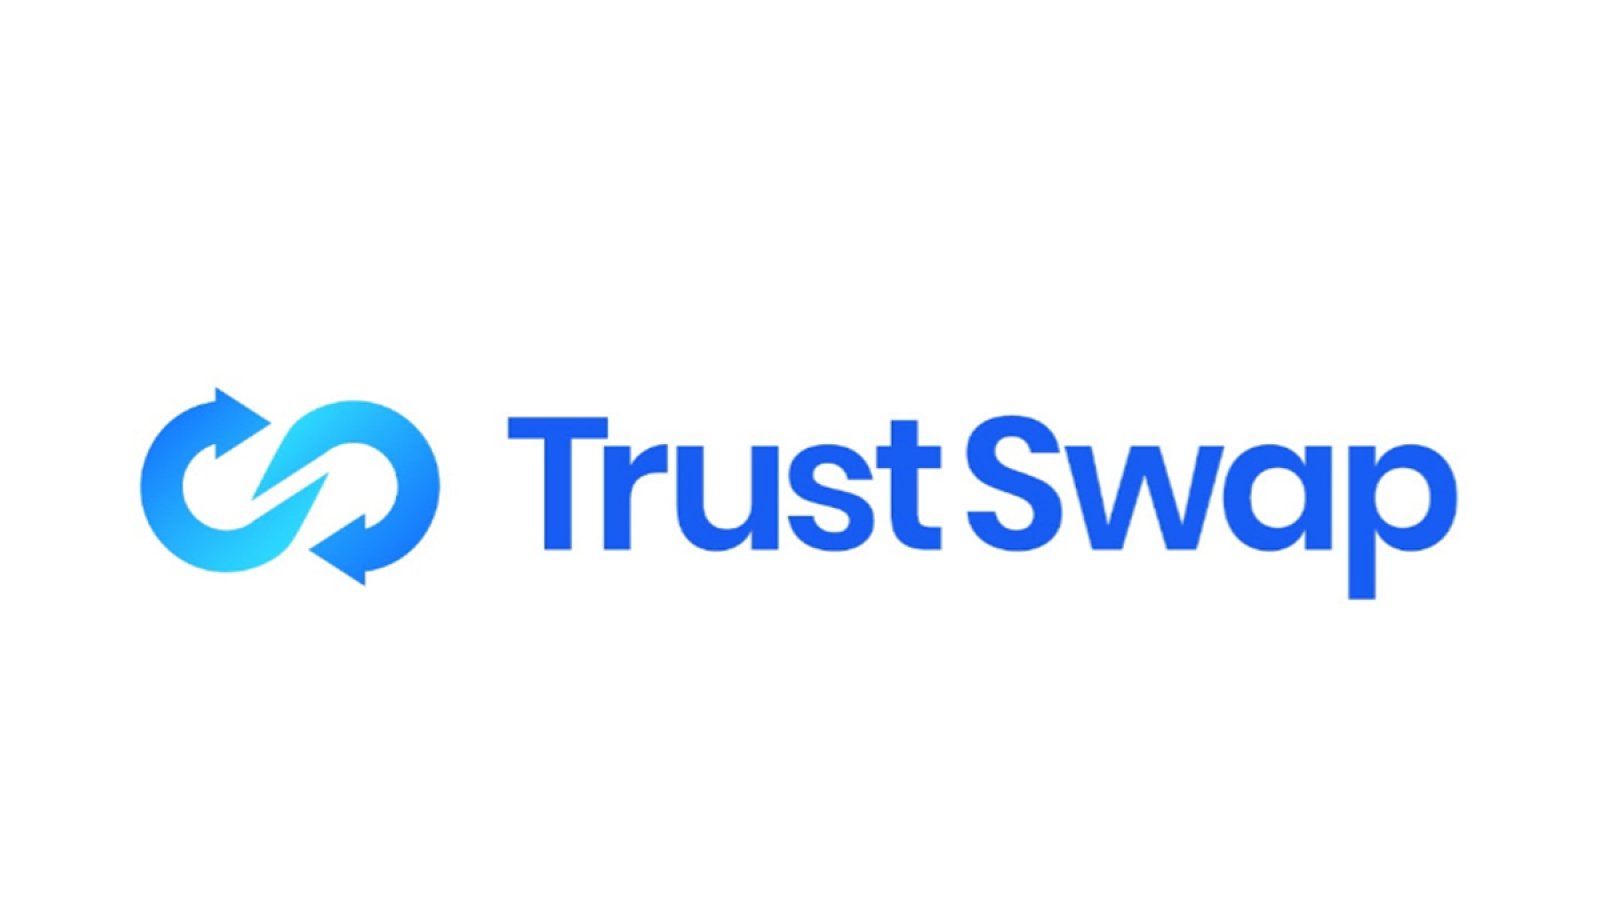 Trustswap